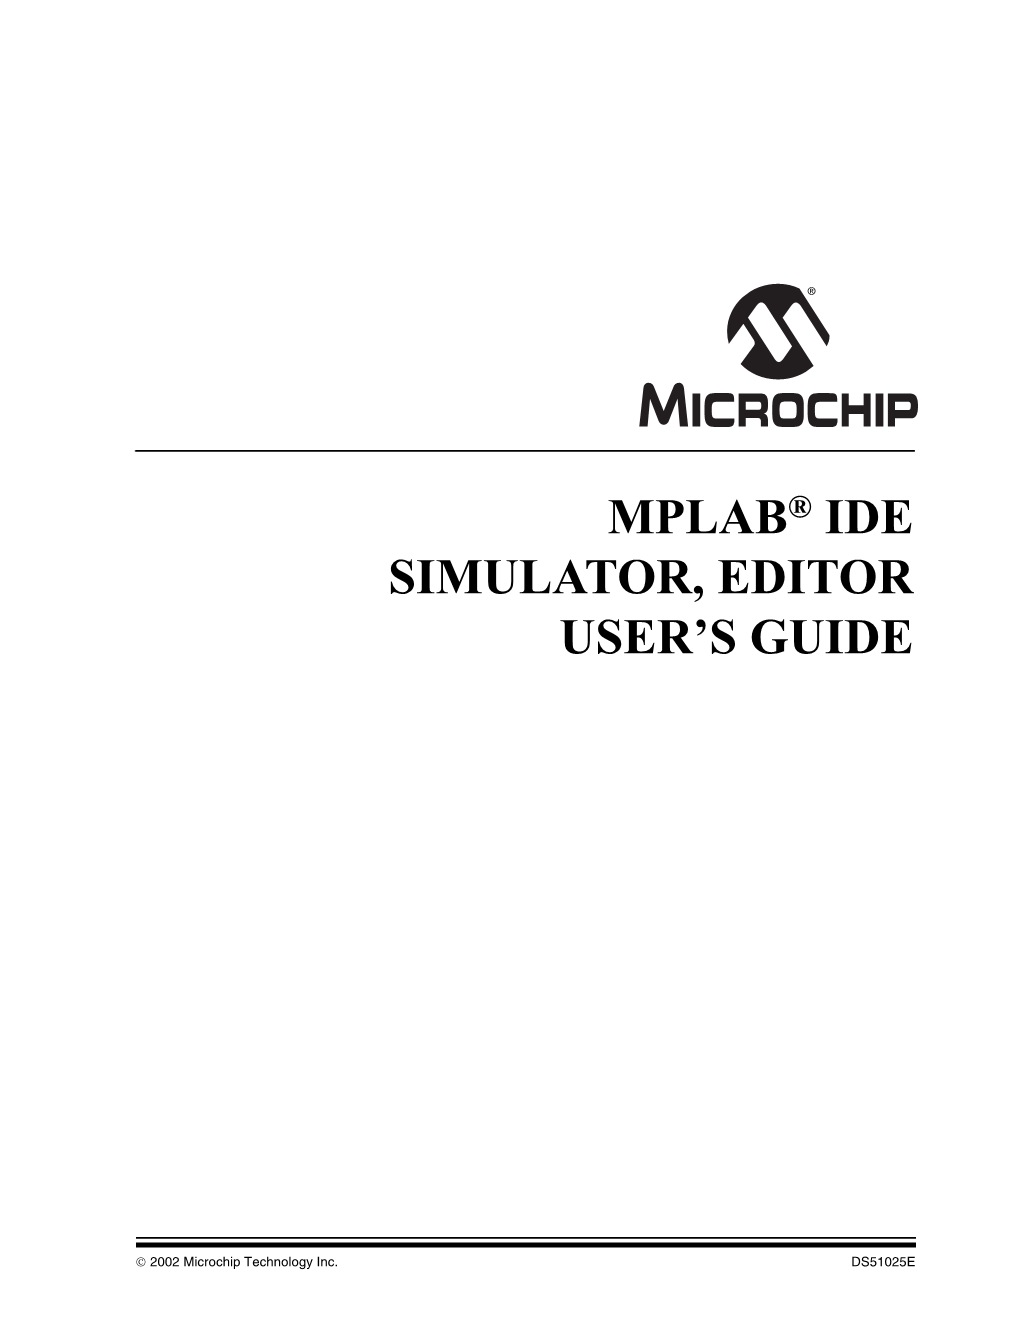 MPLAB IDE Simulator, Editor User's Guide